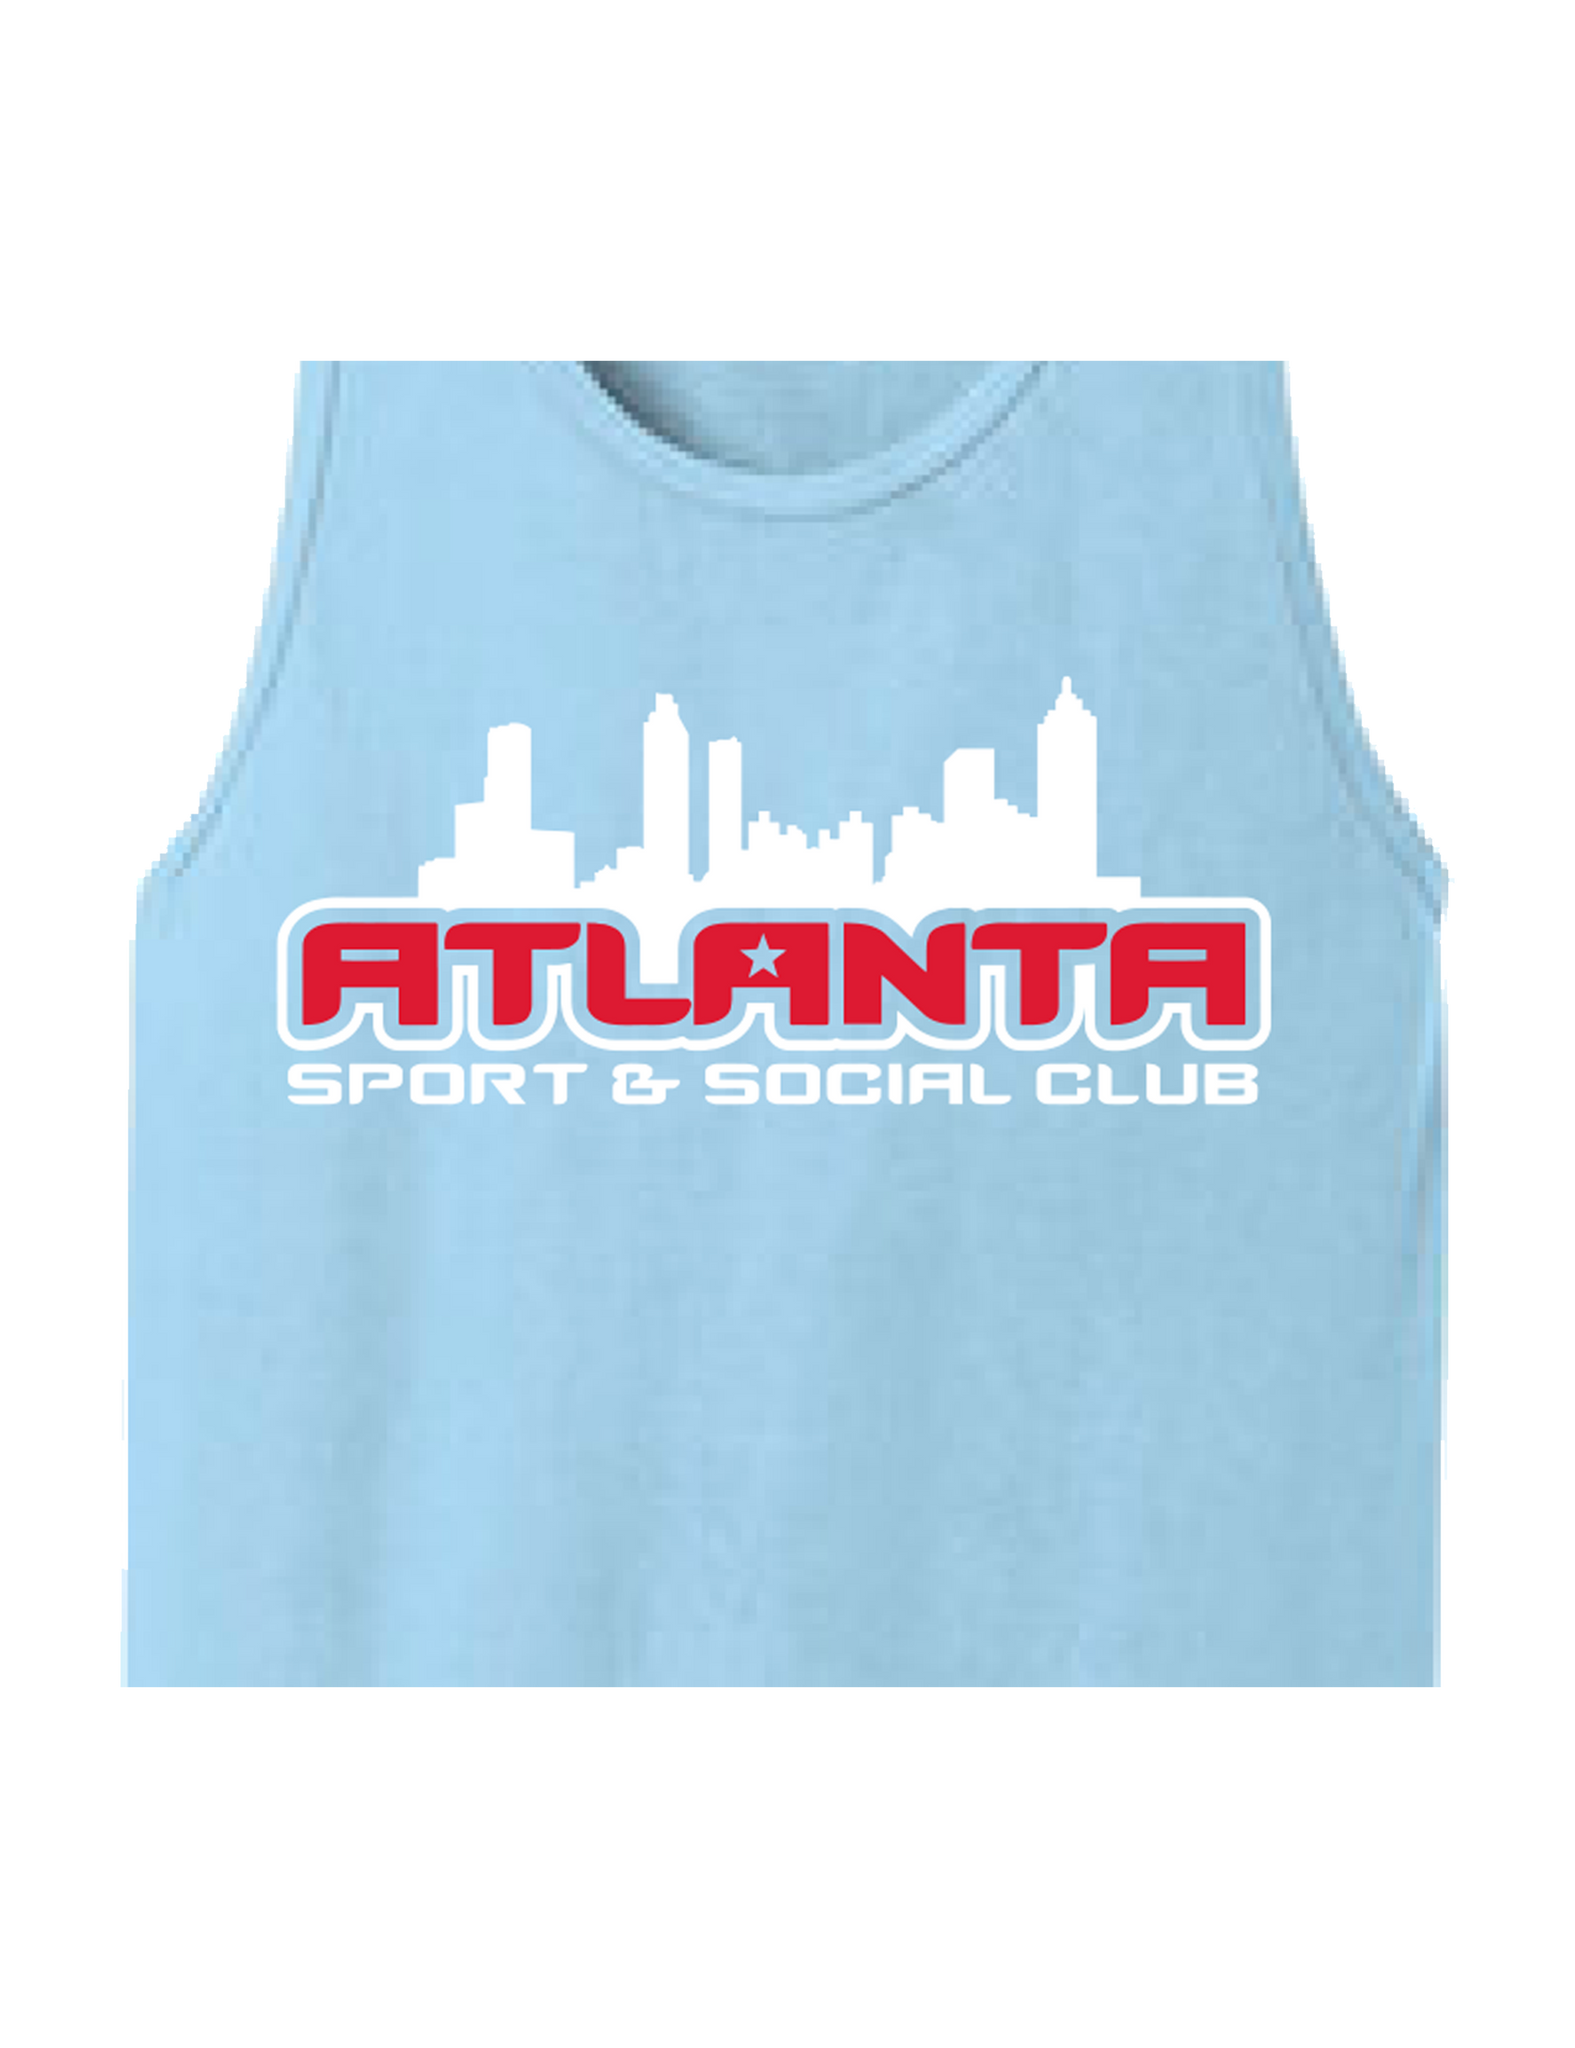 Atlanta Sport & Social Club Tank Top - Light Blue